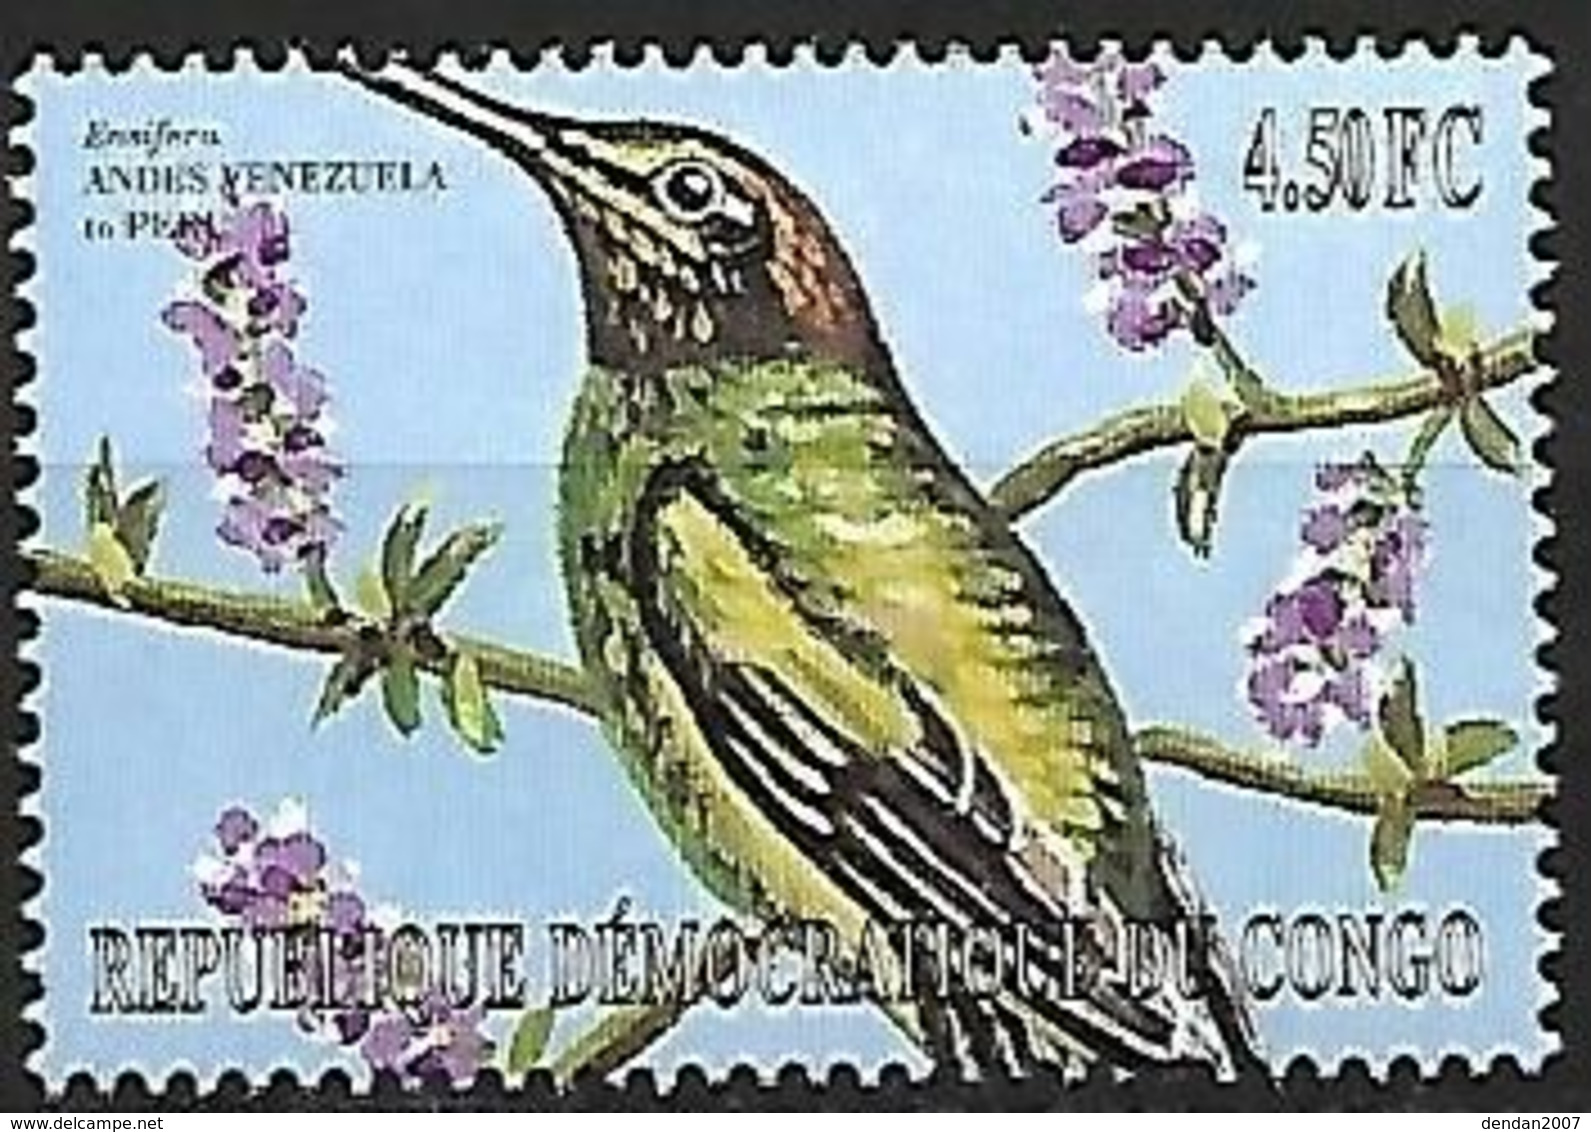 Congo (Kinshsasa) - MNH ** 2001 -     Sword-billed Hummingbird   - Ensifera Ensifera - Hummingbirds